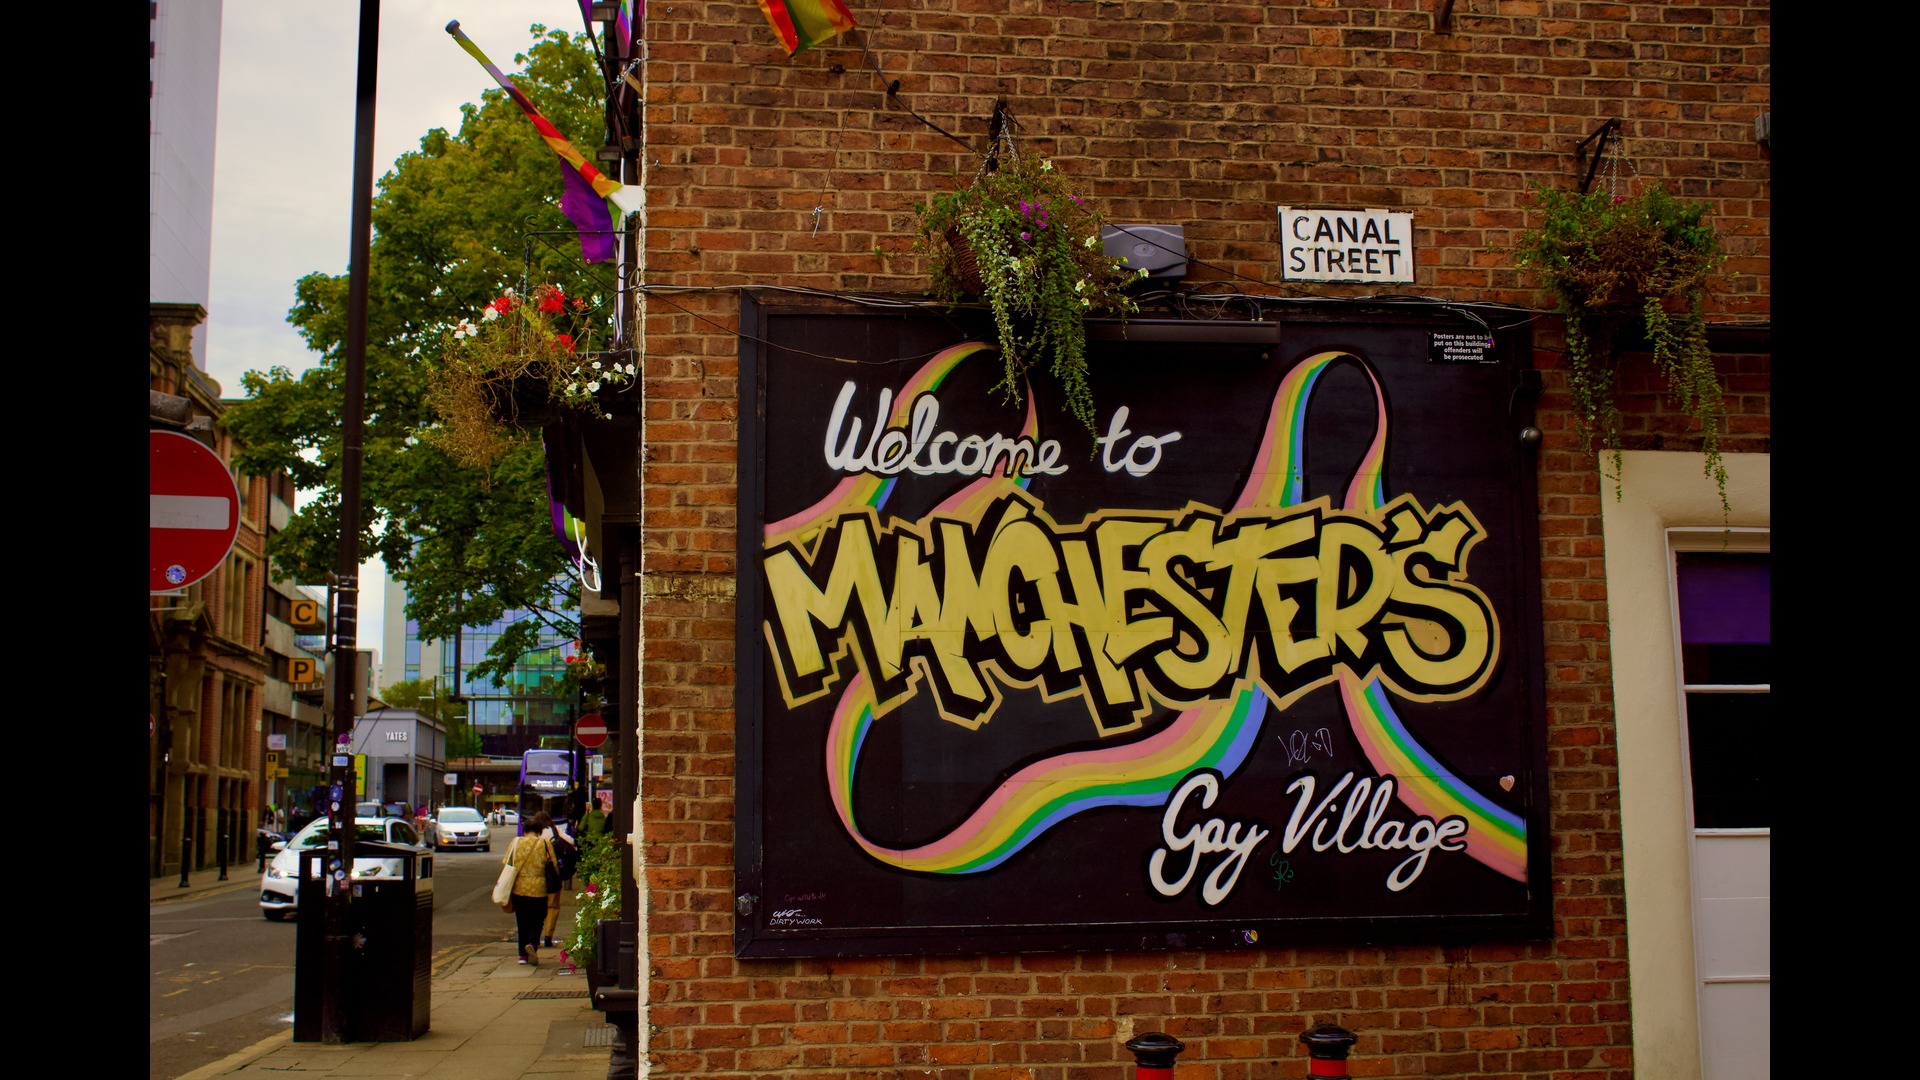 Manchester's Gay Village. Image: Shikhar Talwar